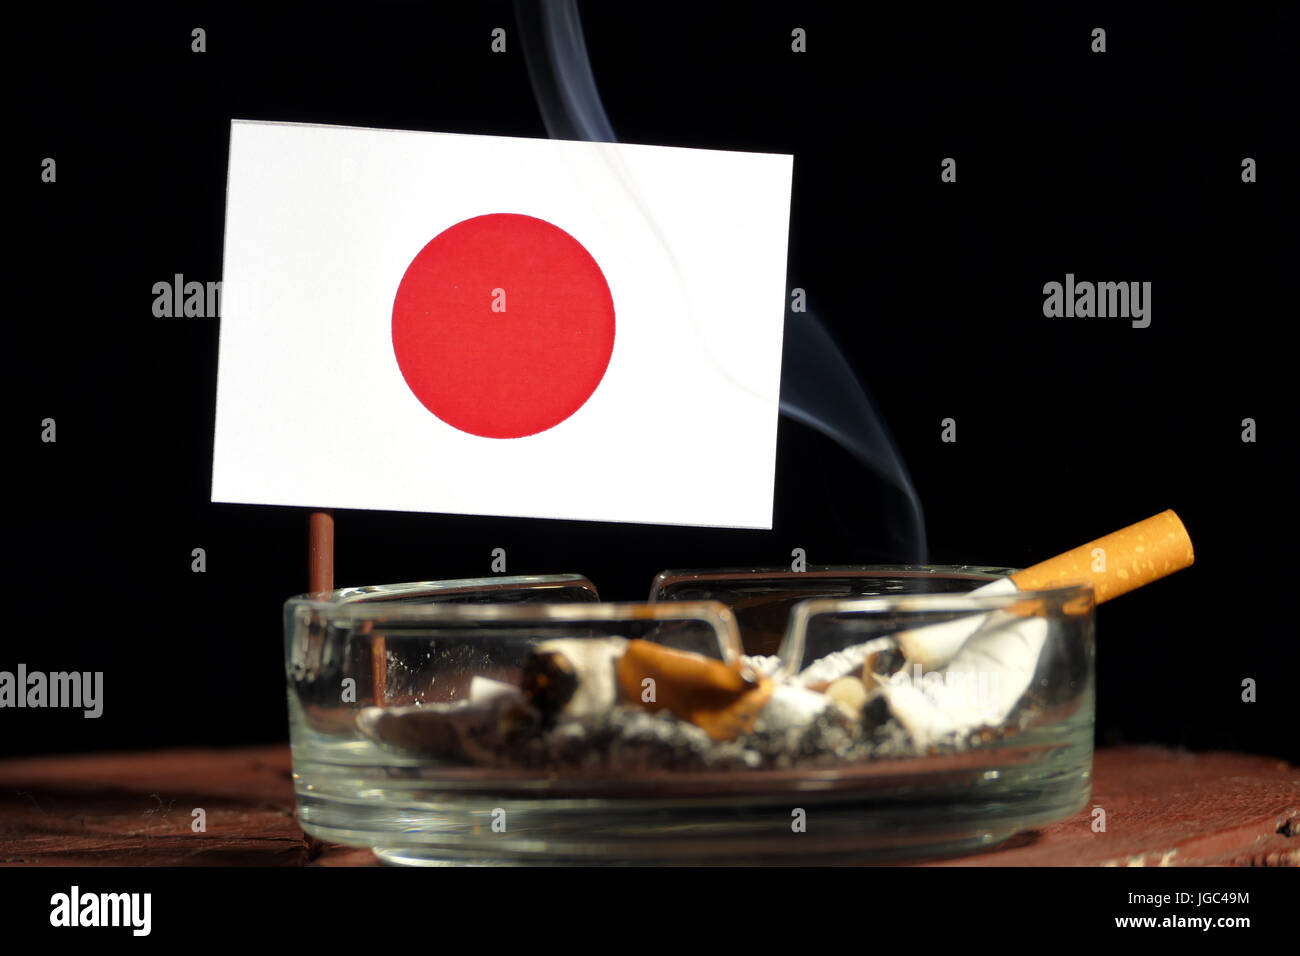 Japanese flag with burning cigarette in ashtray isolated on black background Stock Photo